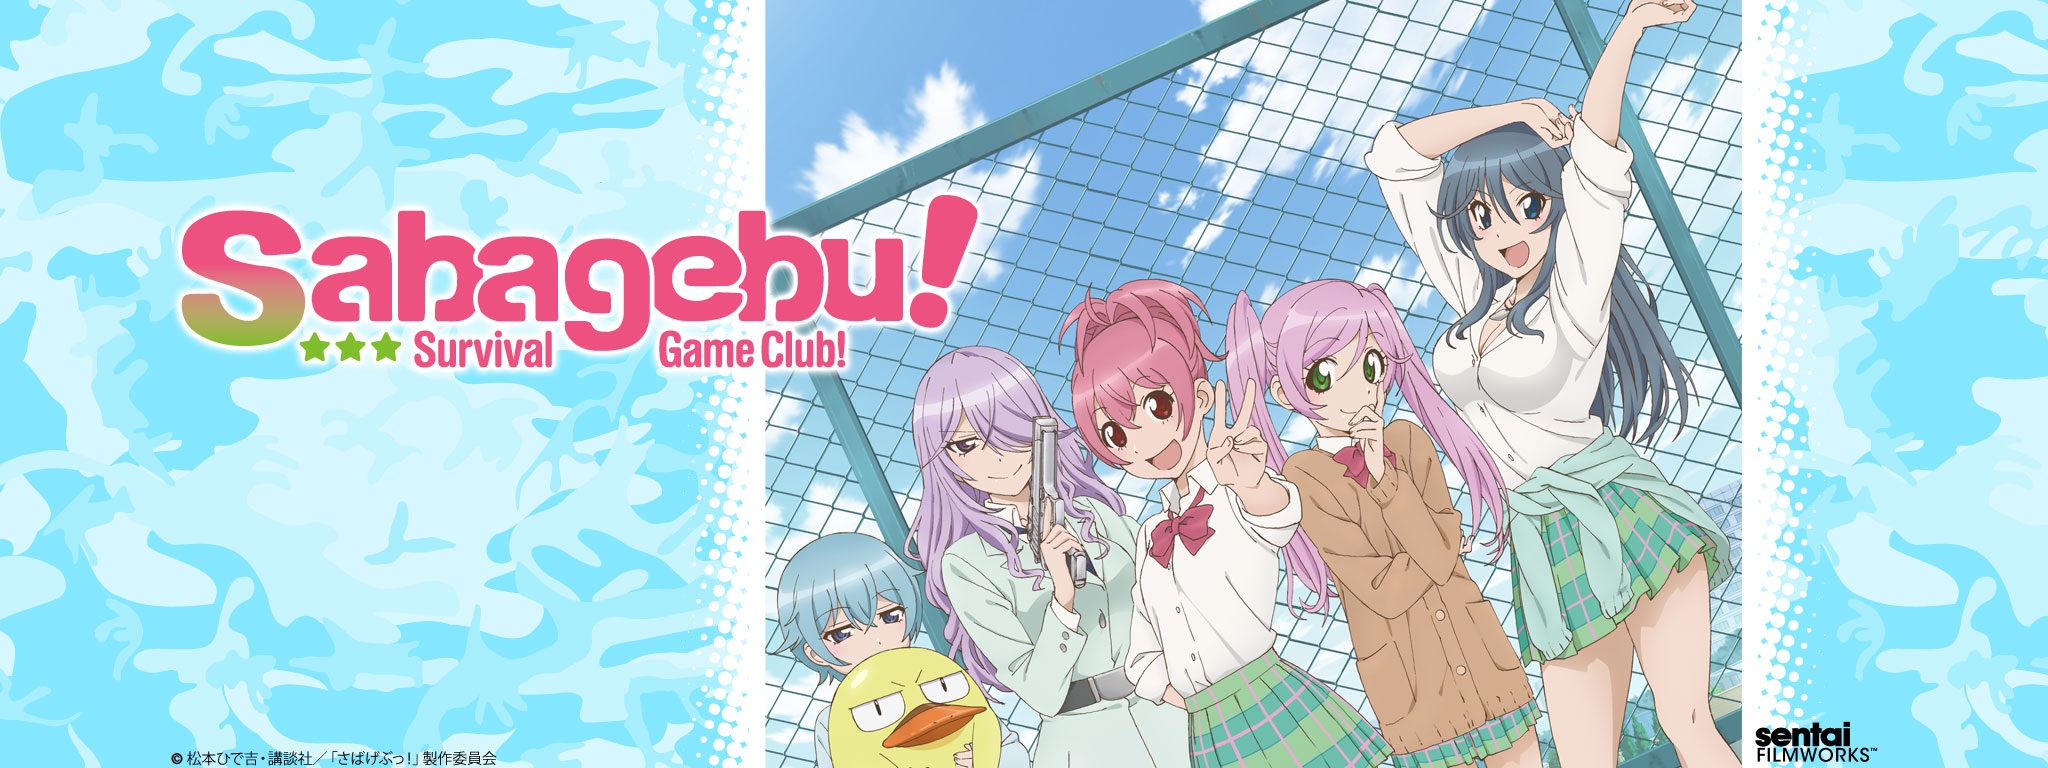 Title Art for Sabagebu! Survival Game Club! OVA